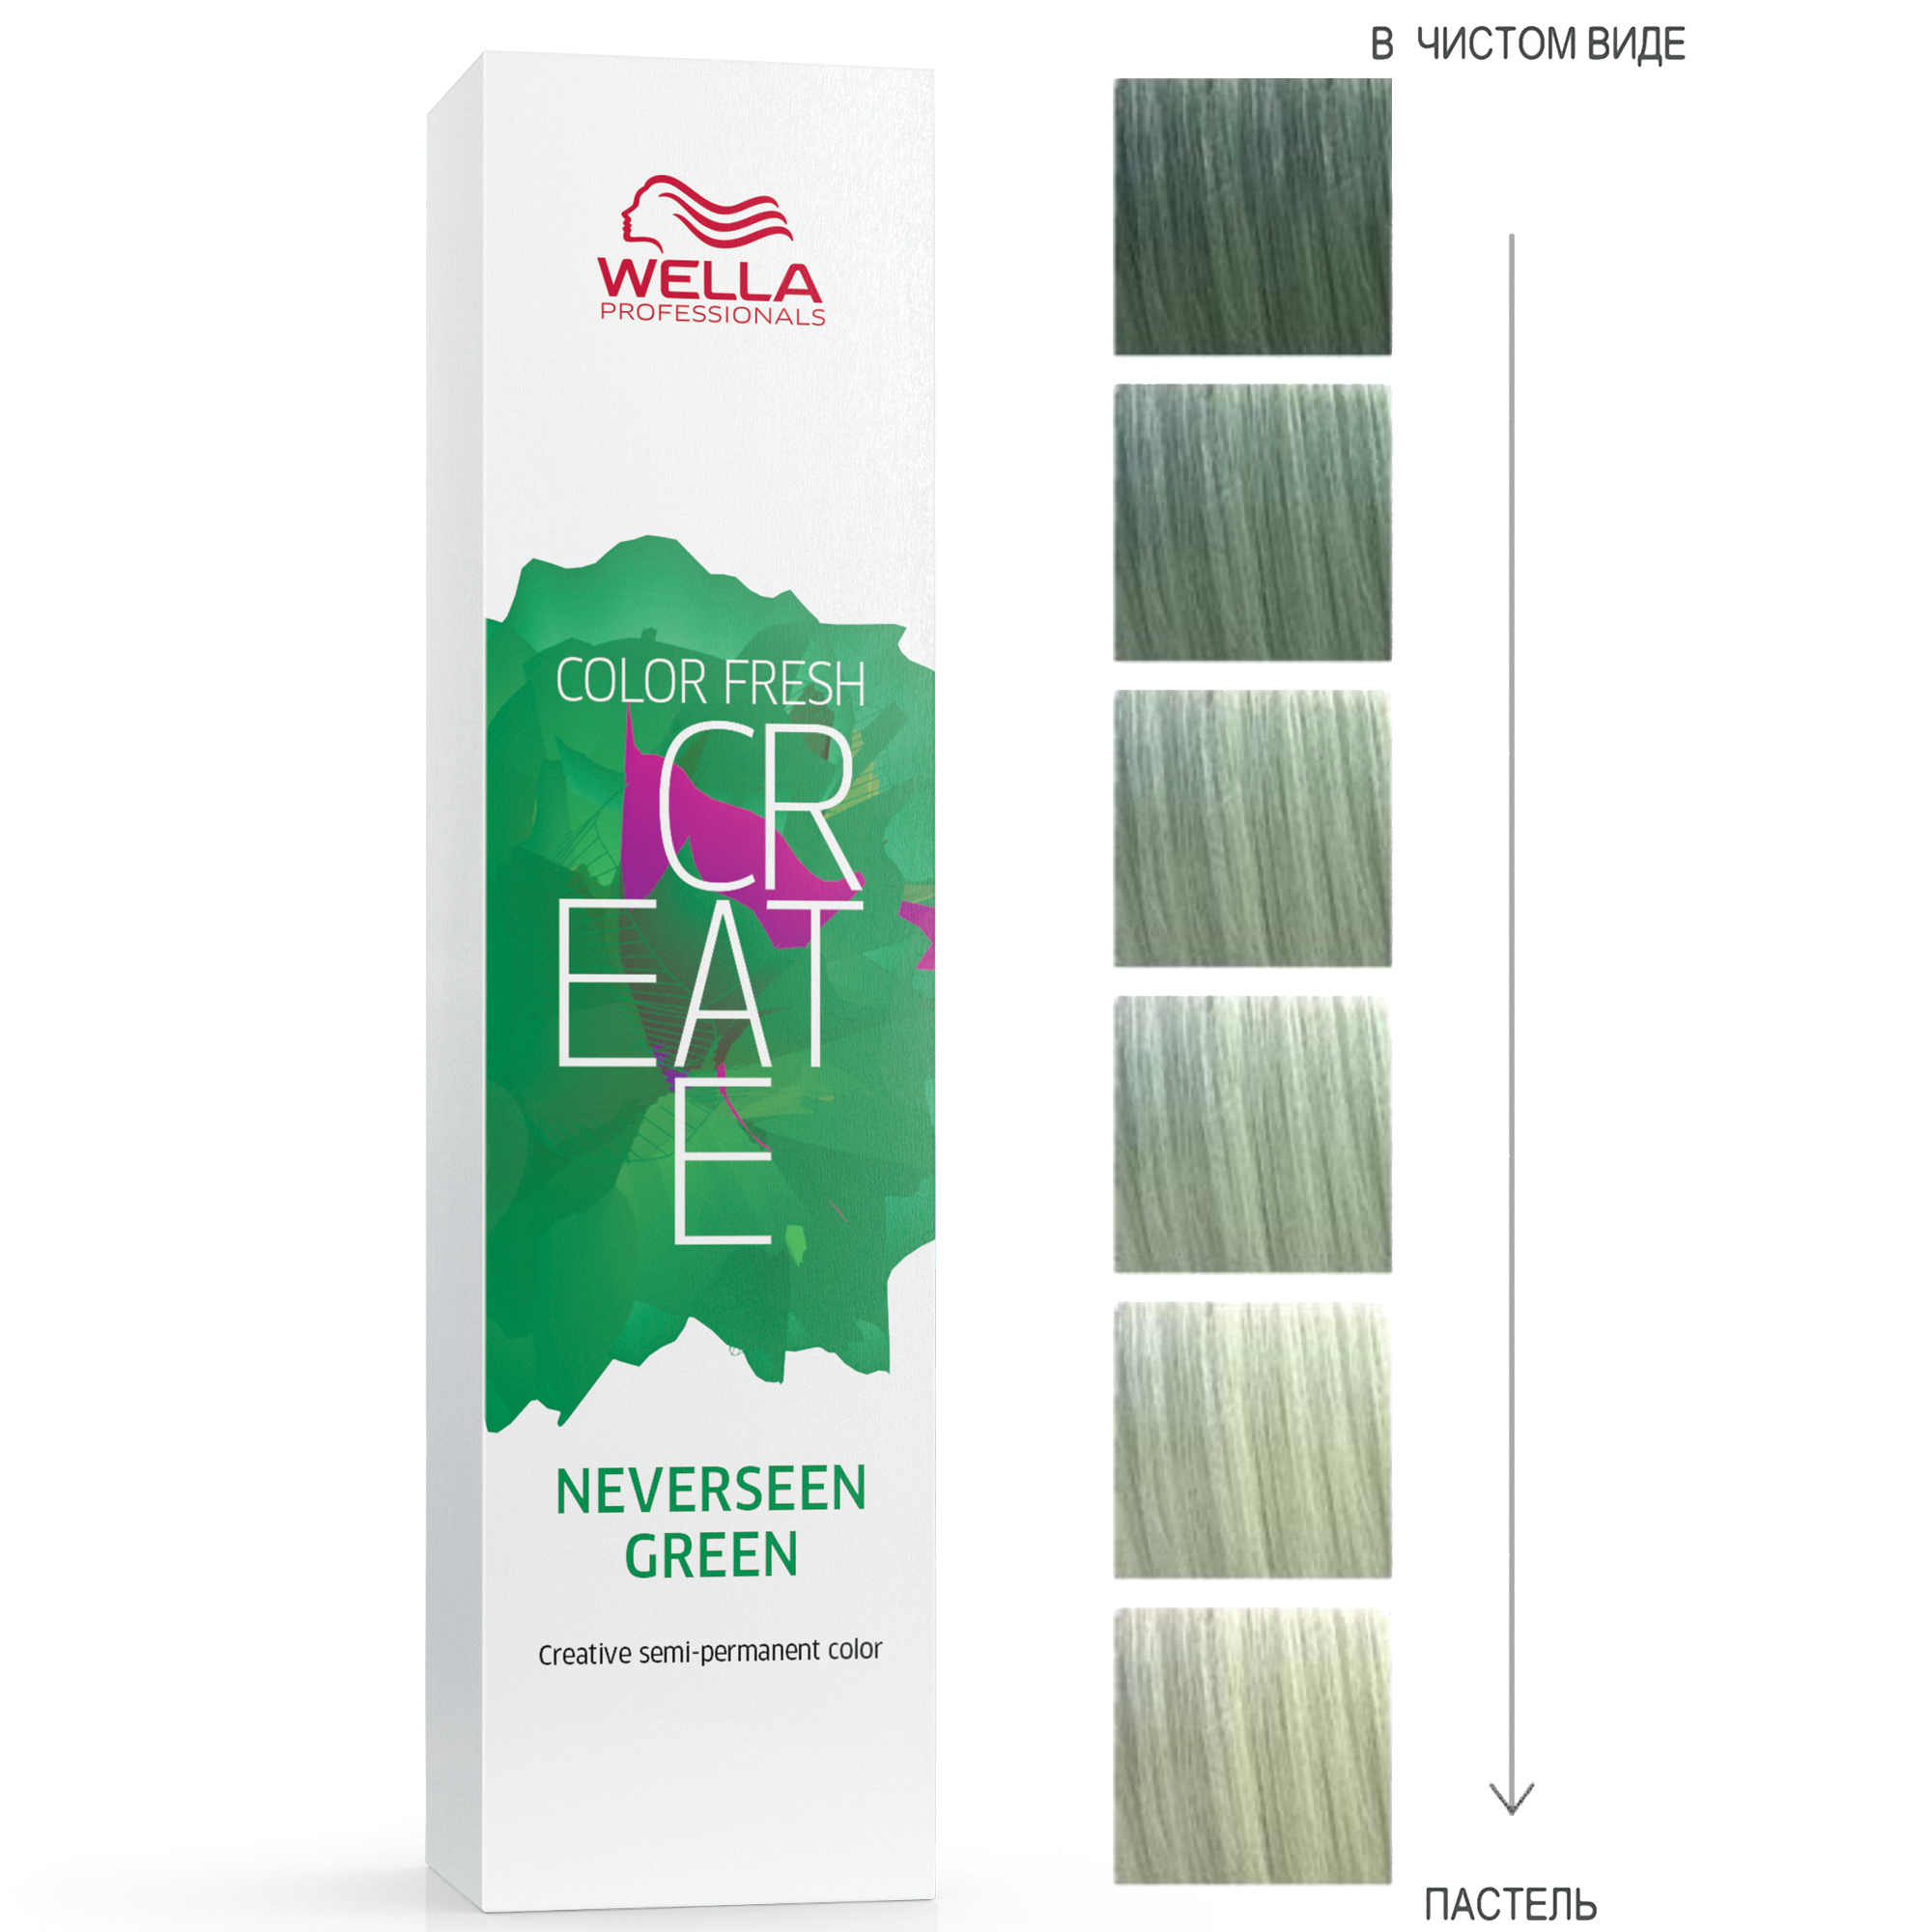 Wella color fresh create оттеночная краска neverseen green тропический зеленый 60мл БС